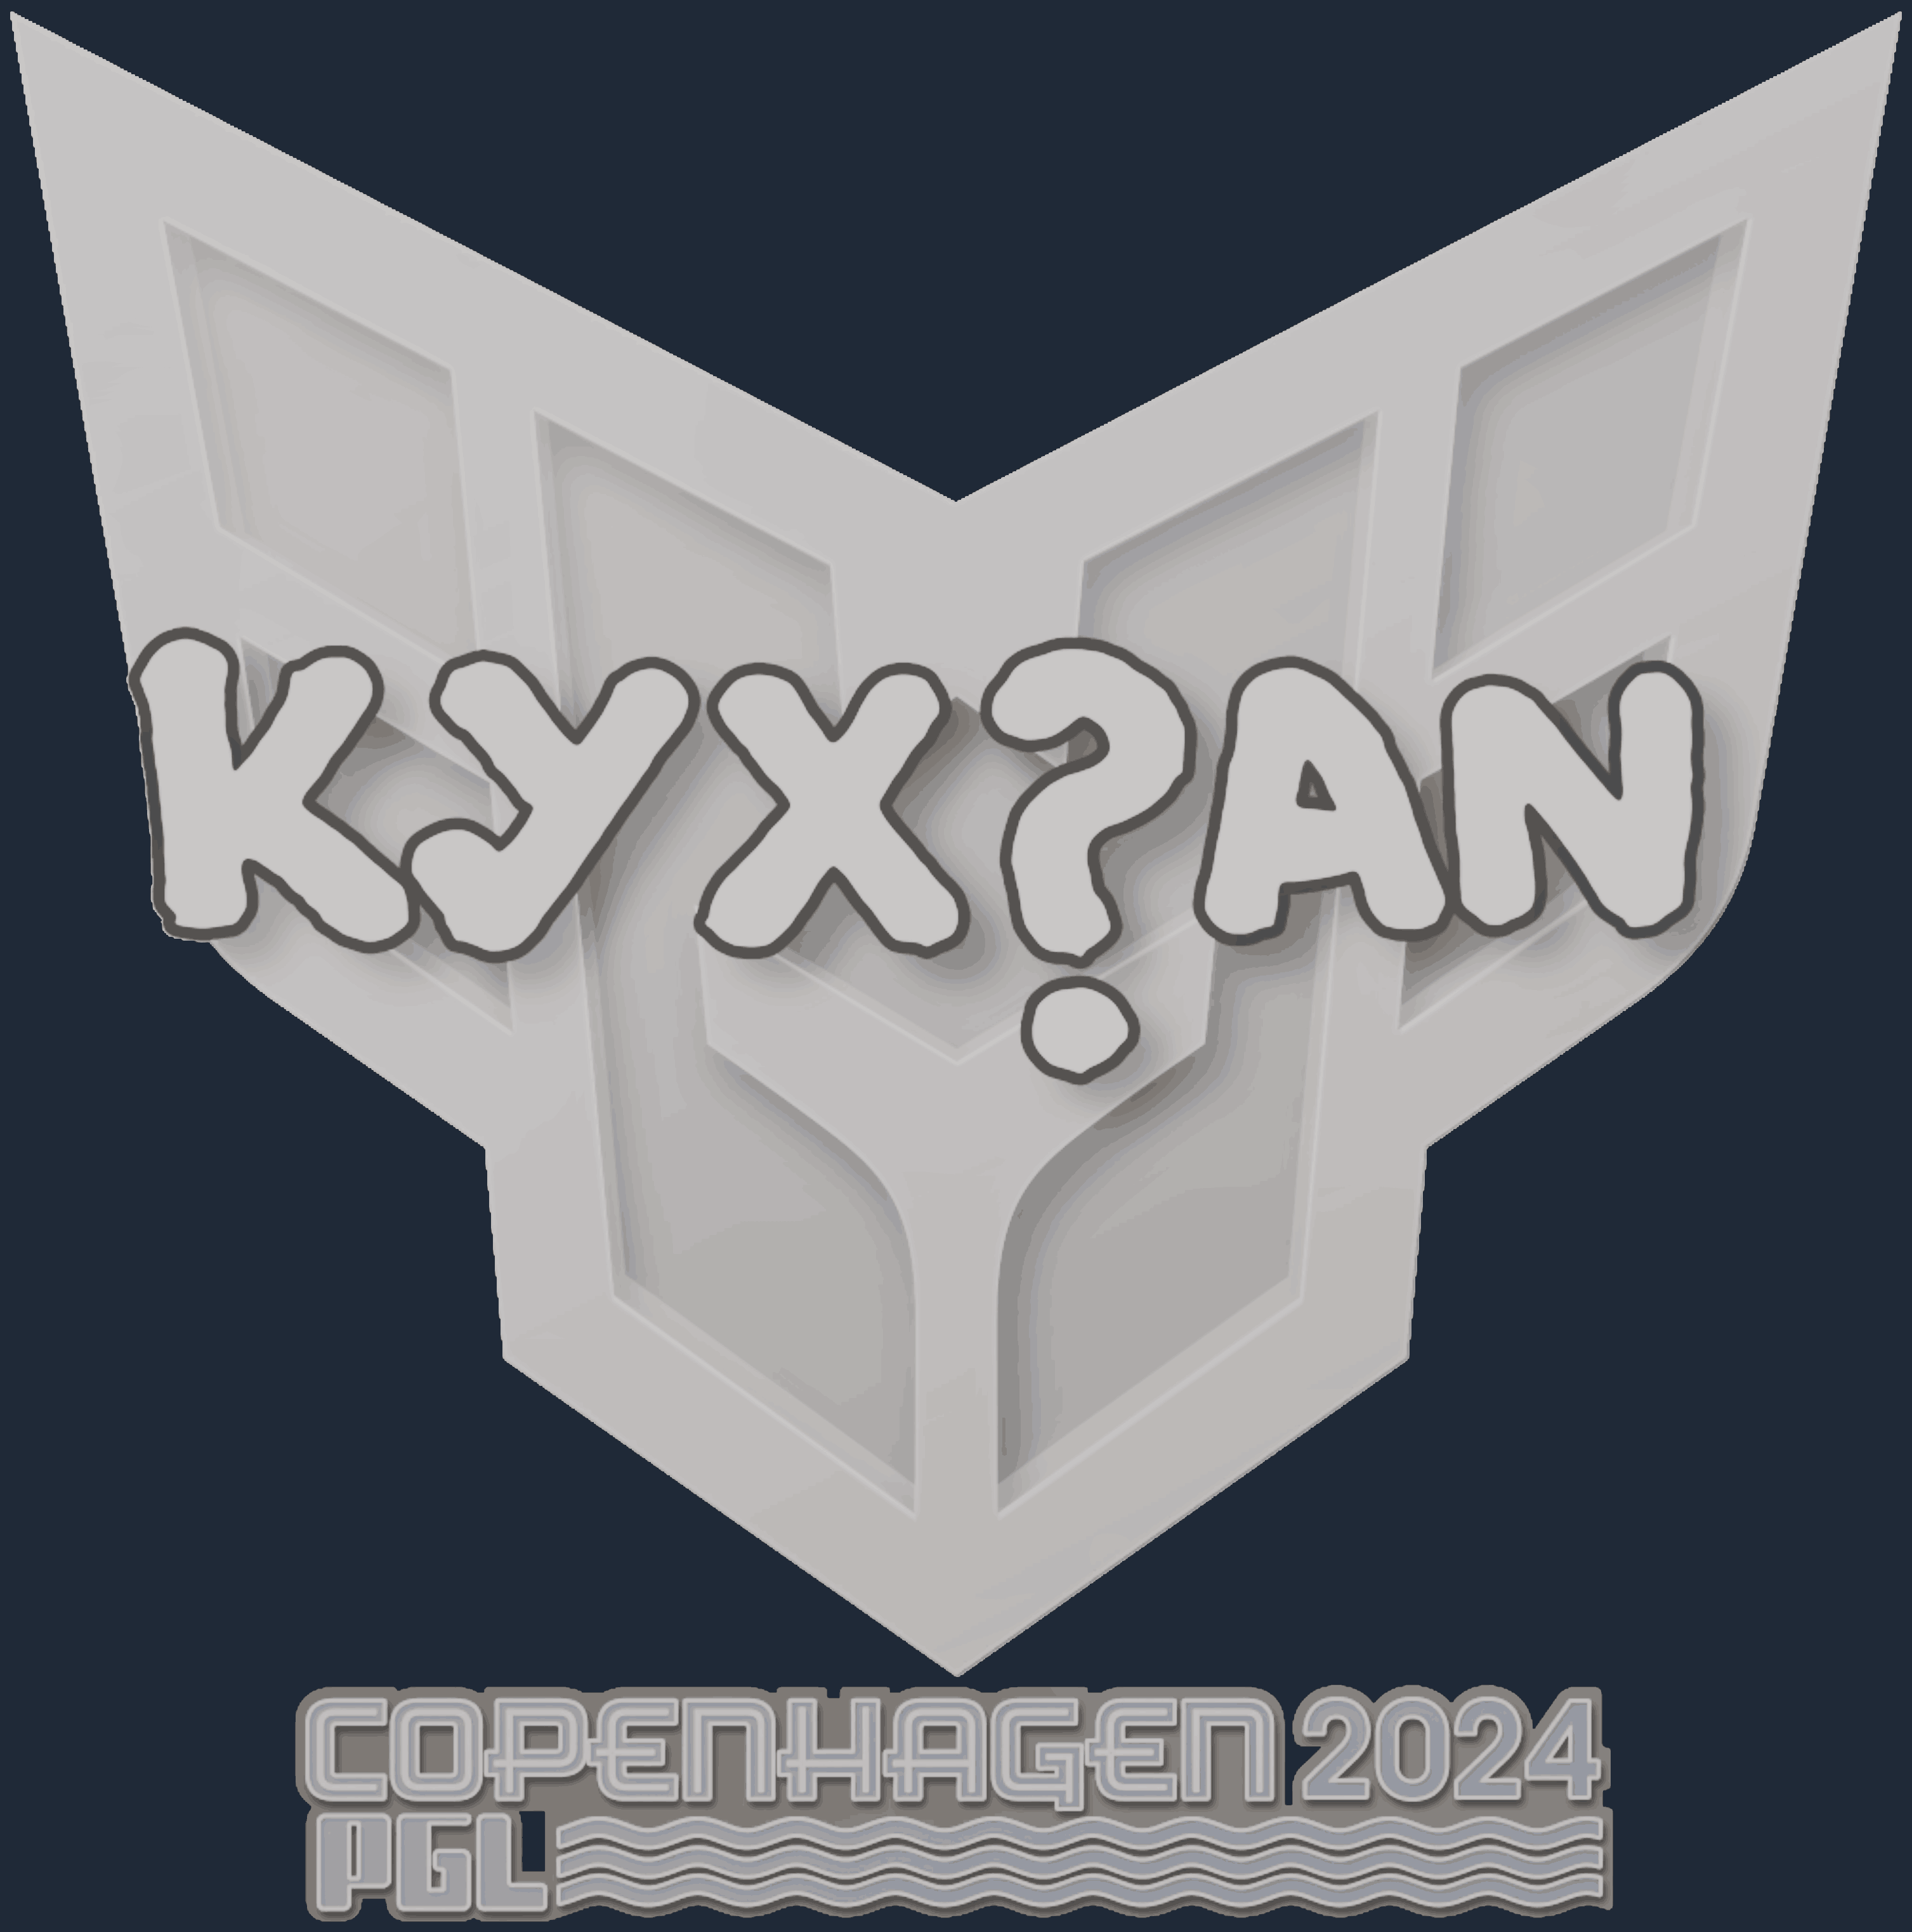 Sticker | kyxsan | Copenhagen 2024 Screenshot